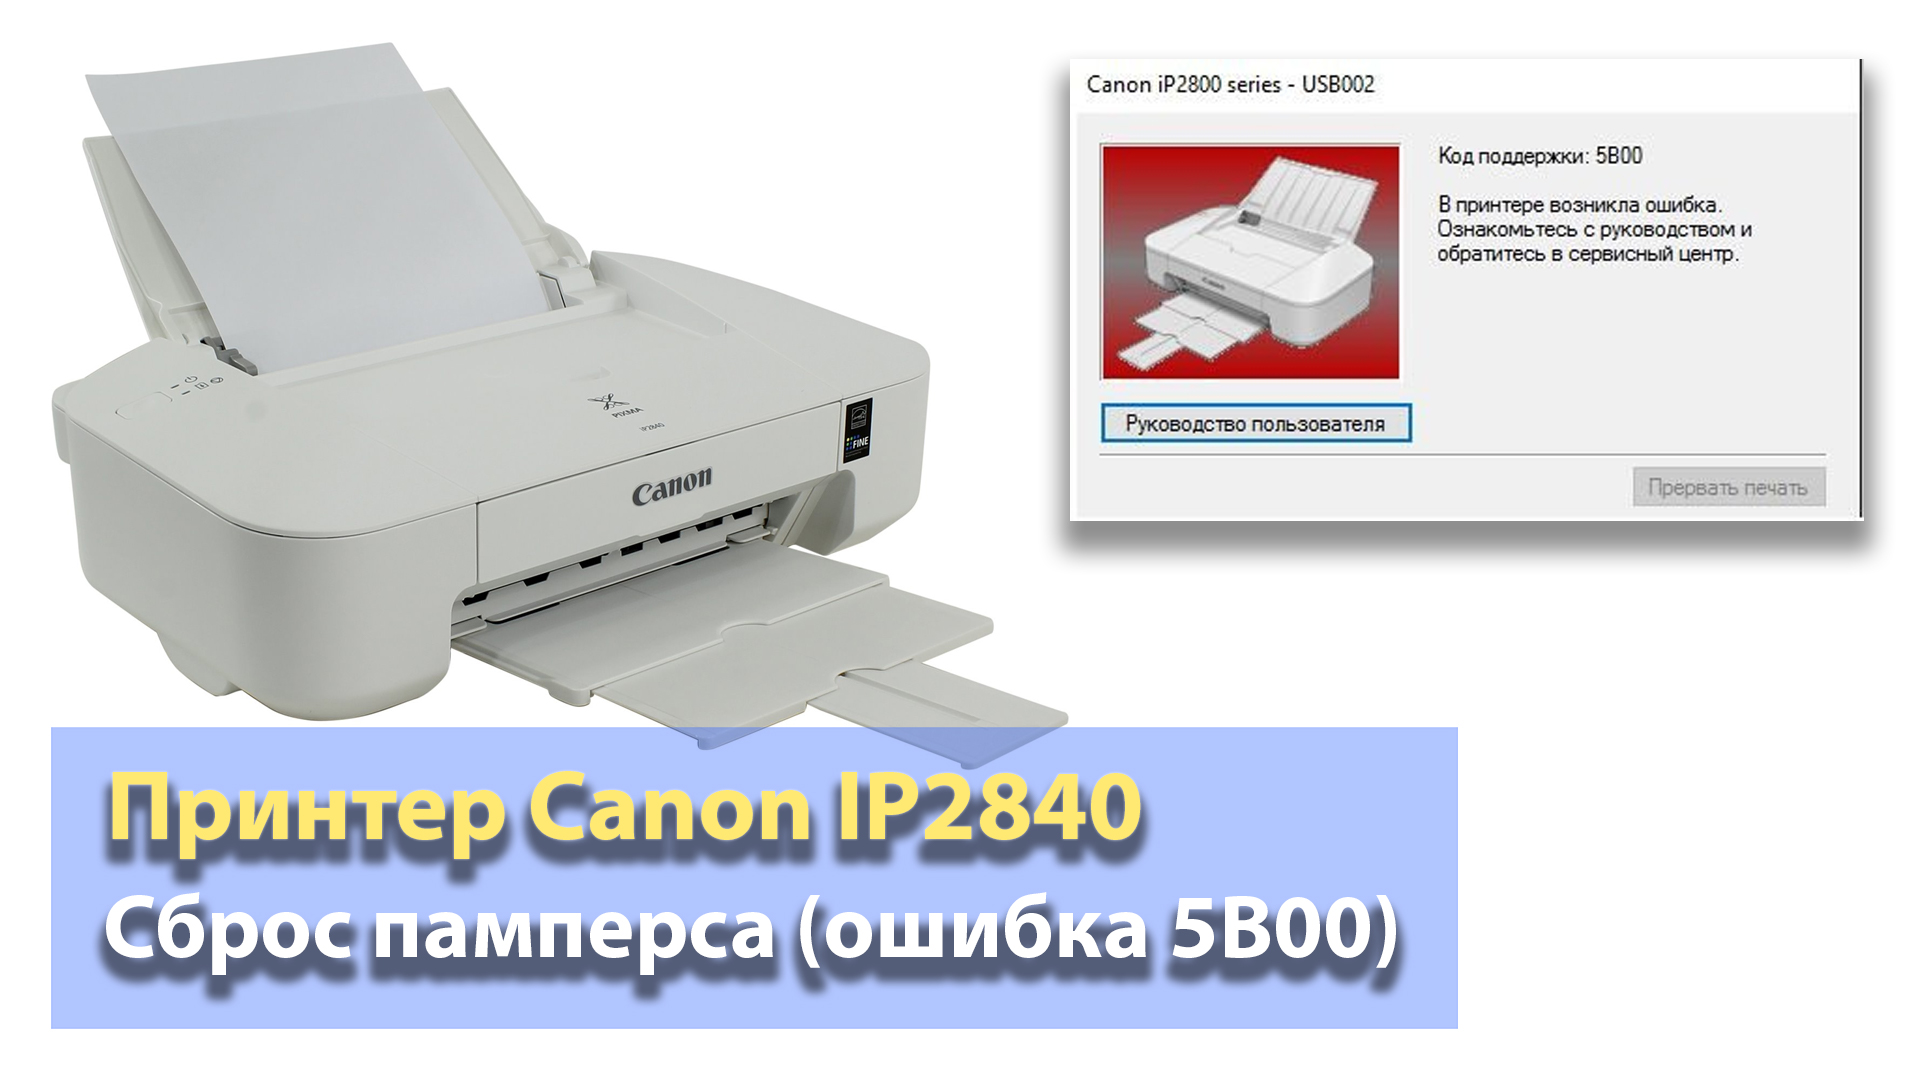 Сброс памперса canon pixma. 5b00 Canon. PIXMA ip2840. Ошибка 5в00 принтер Кэнон.